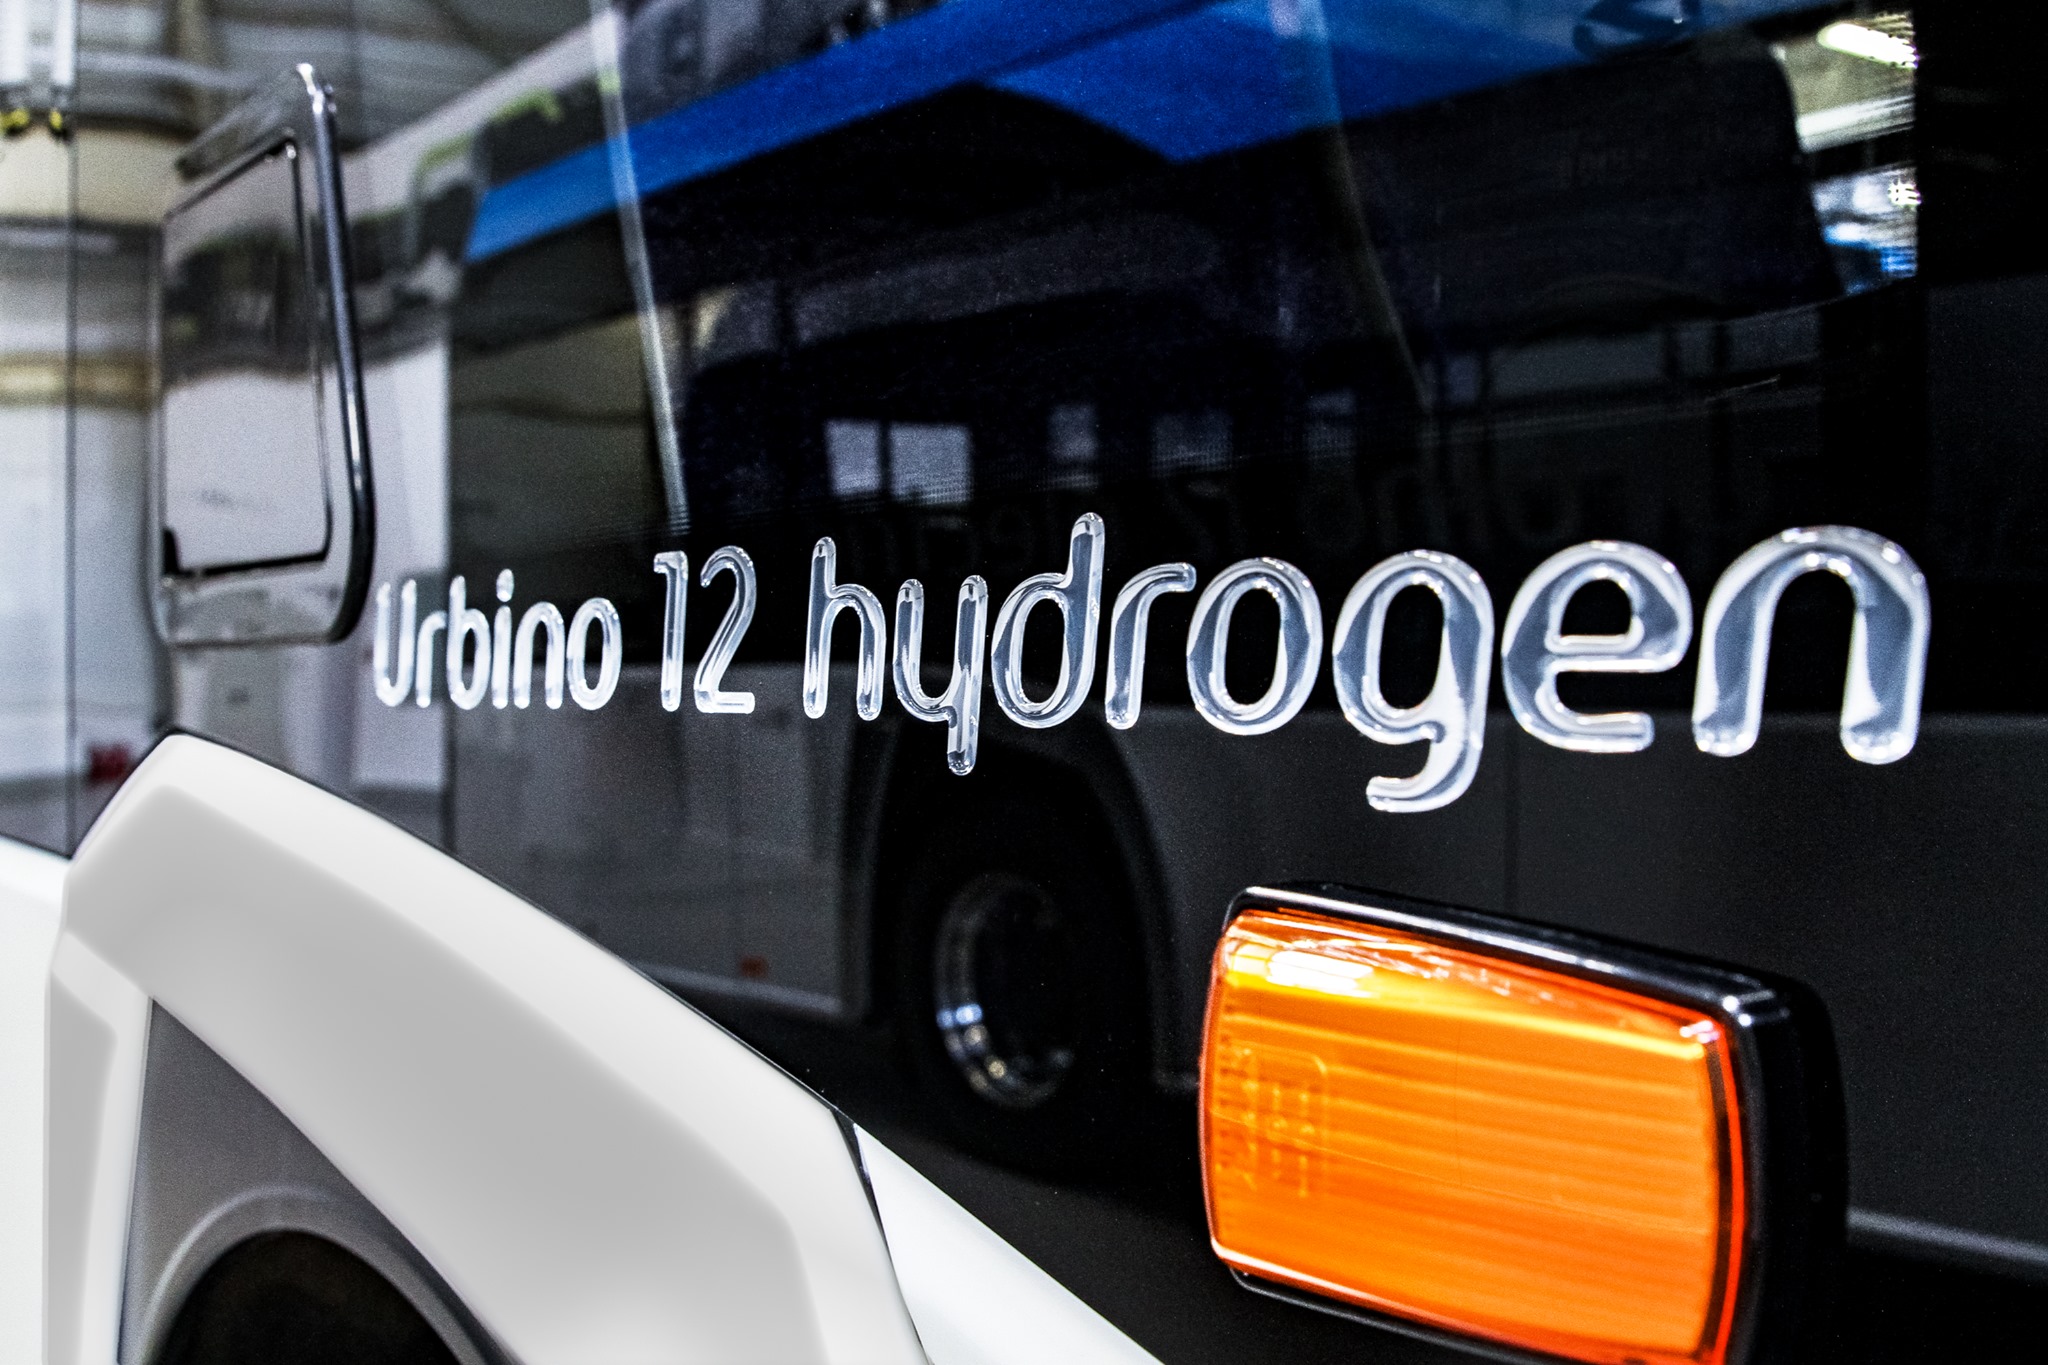 solaris buses sweden solaris hydrogen